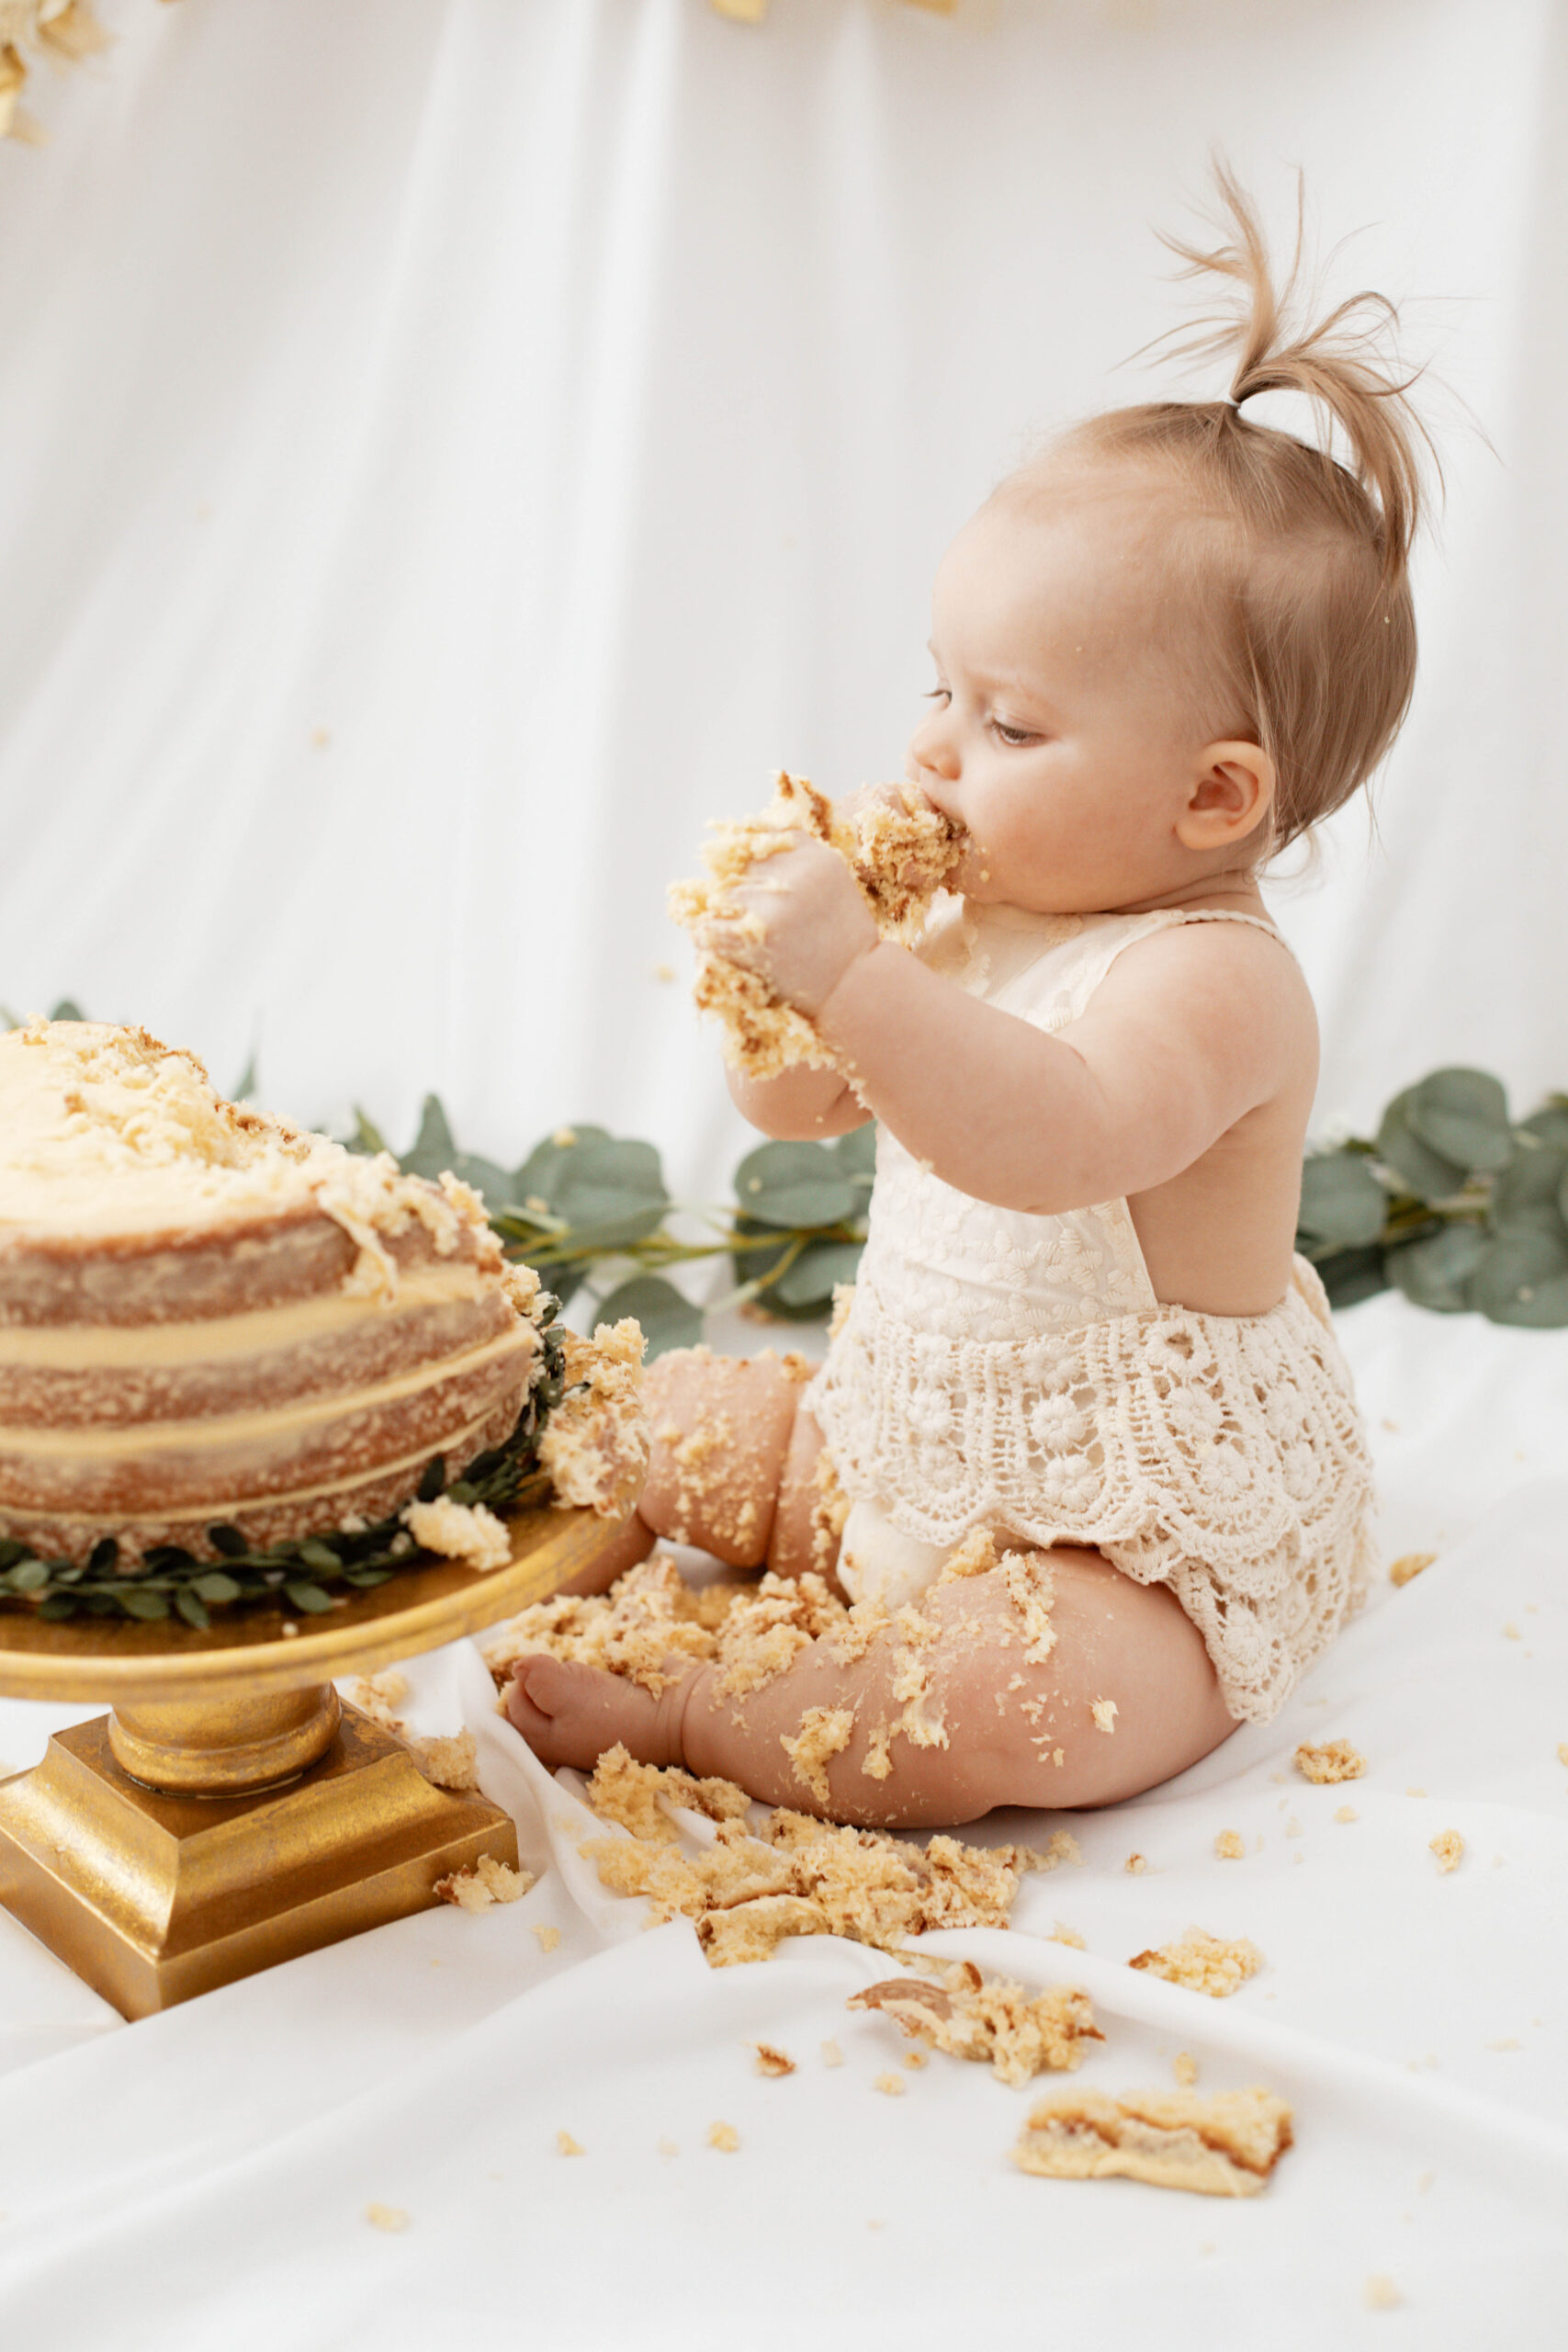 4 Tips For The Best DIY Cake Smash Photos - Caitlyn & Co.